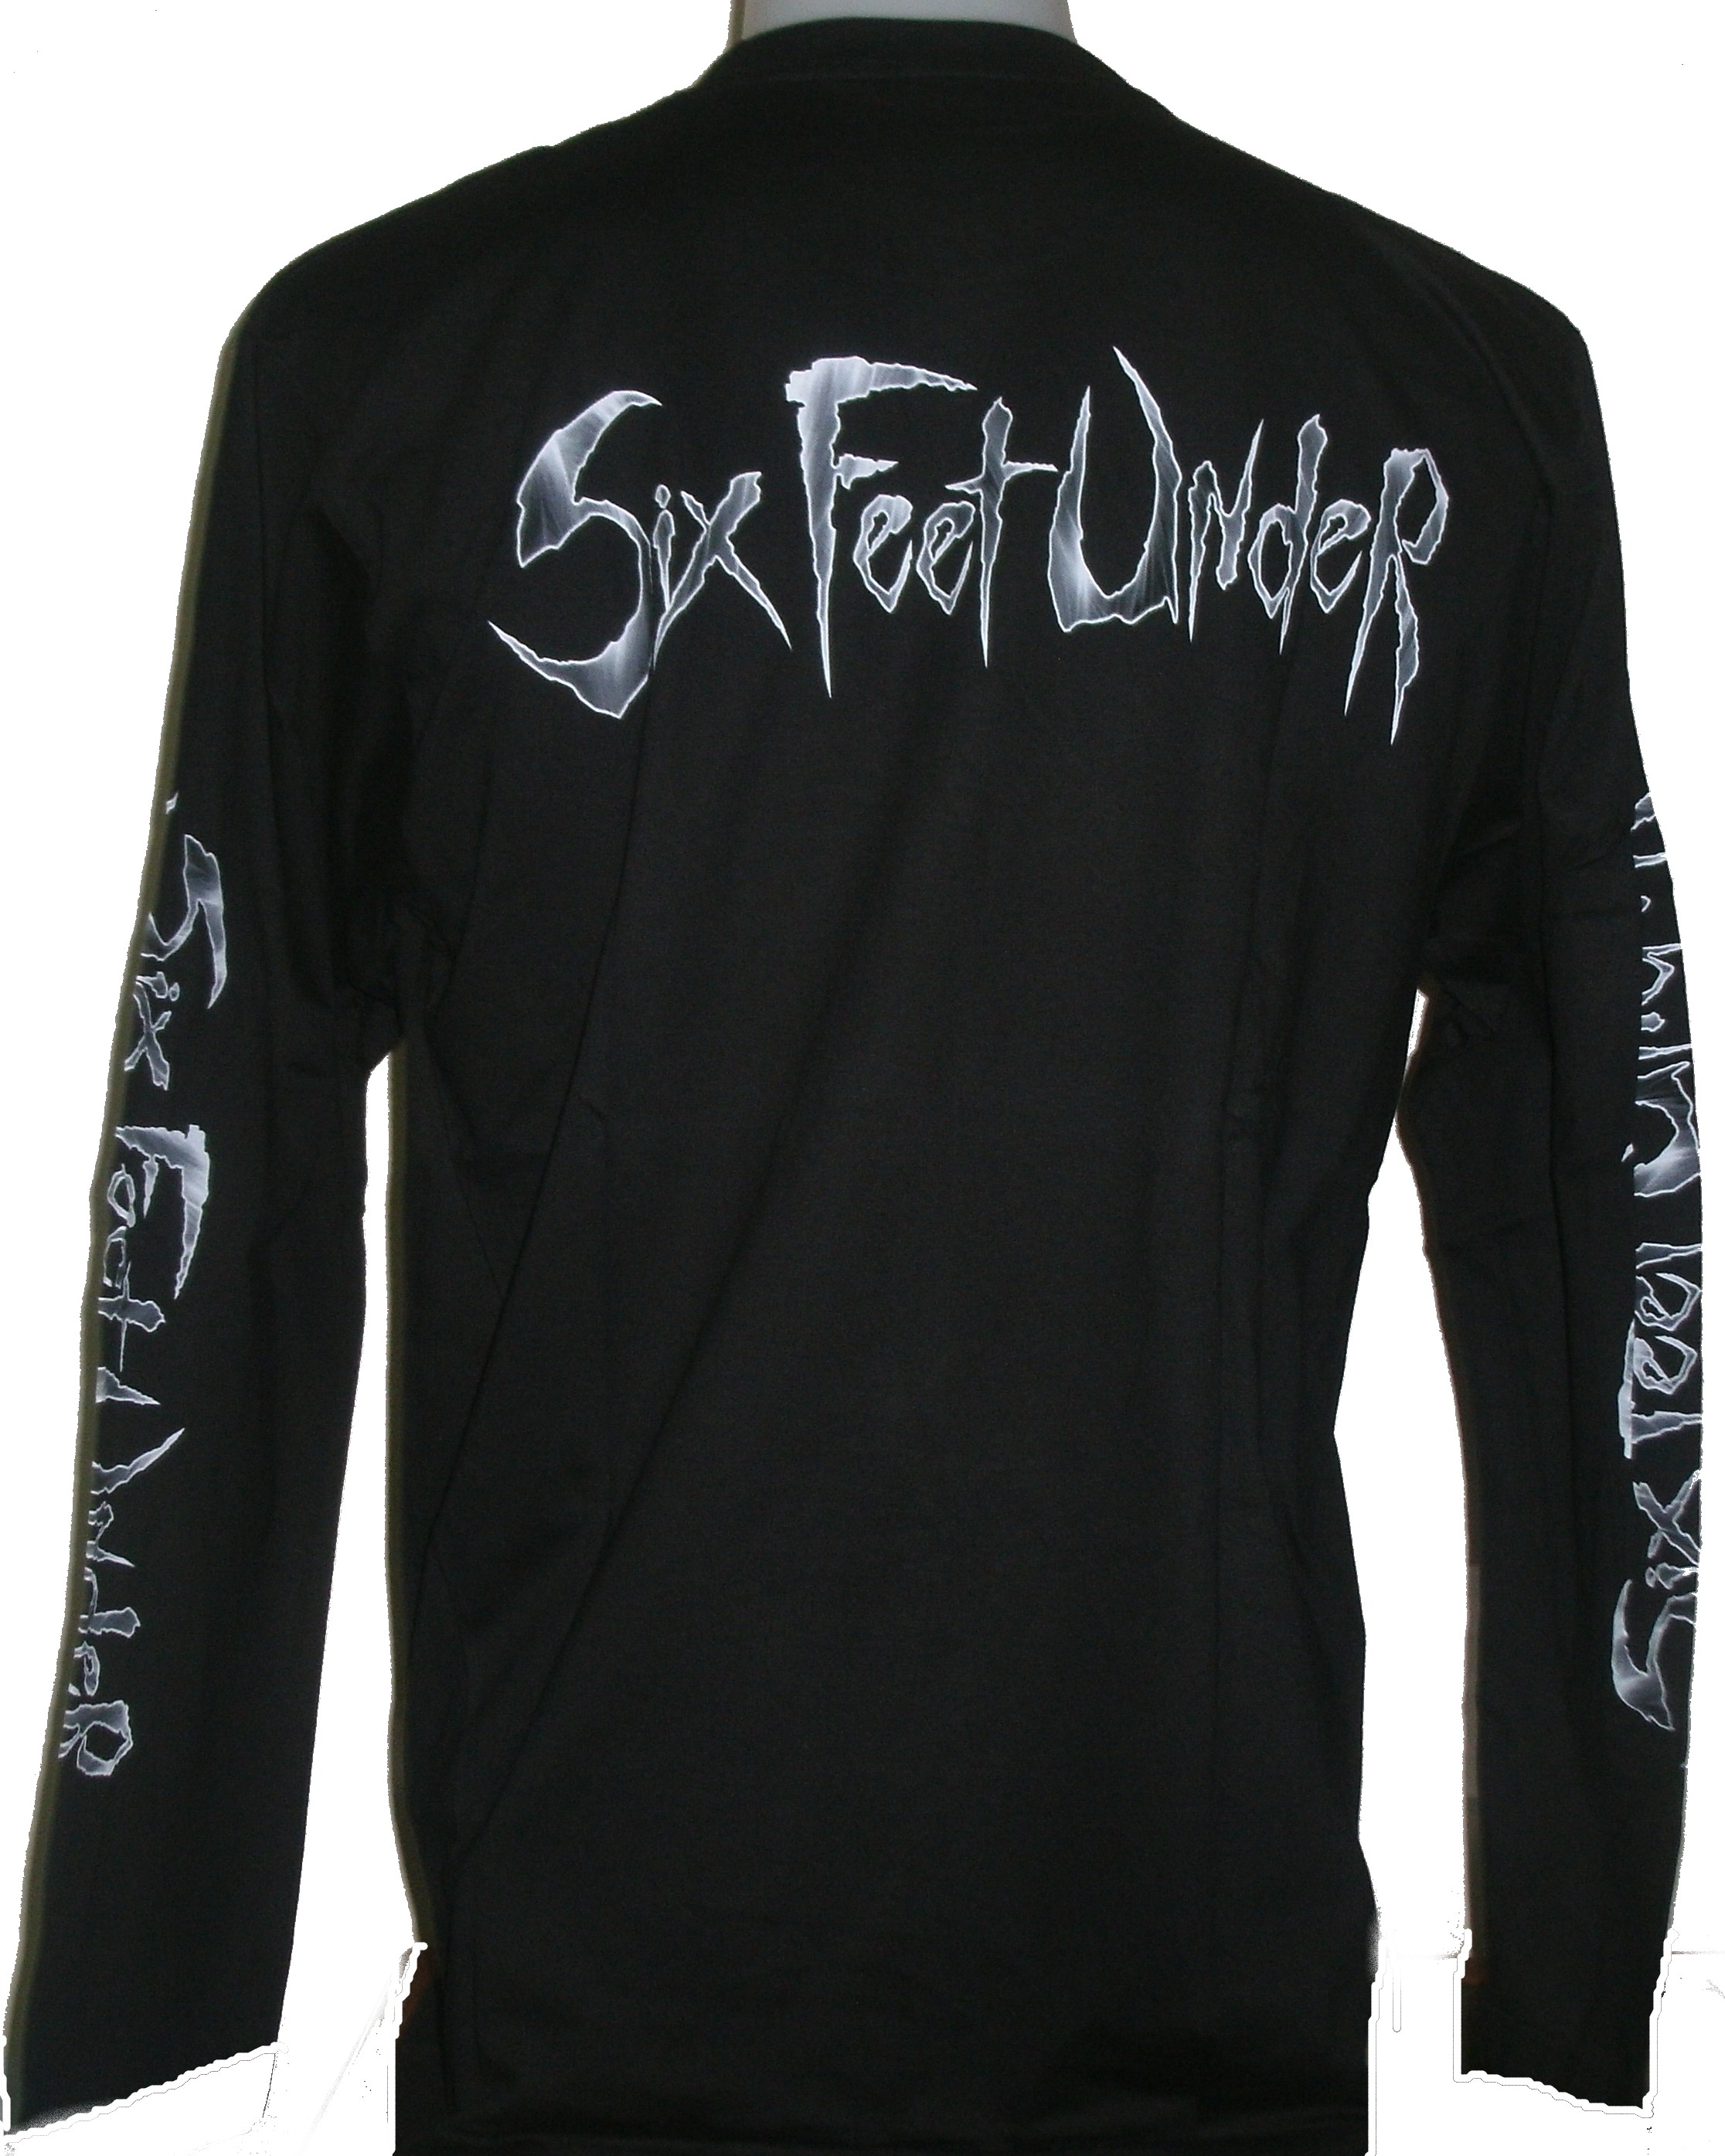 Six Feet Under long-sleeved t-shirt Wake the Night! size XXL – RoxxBKK